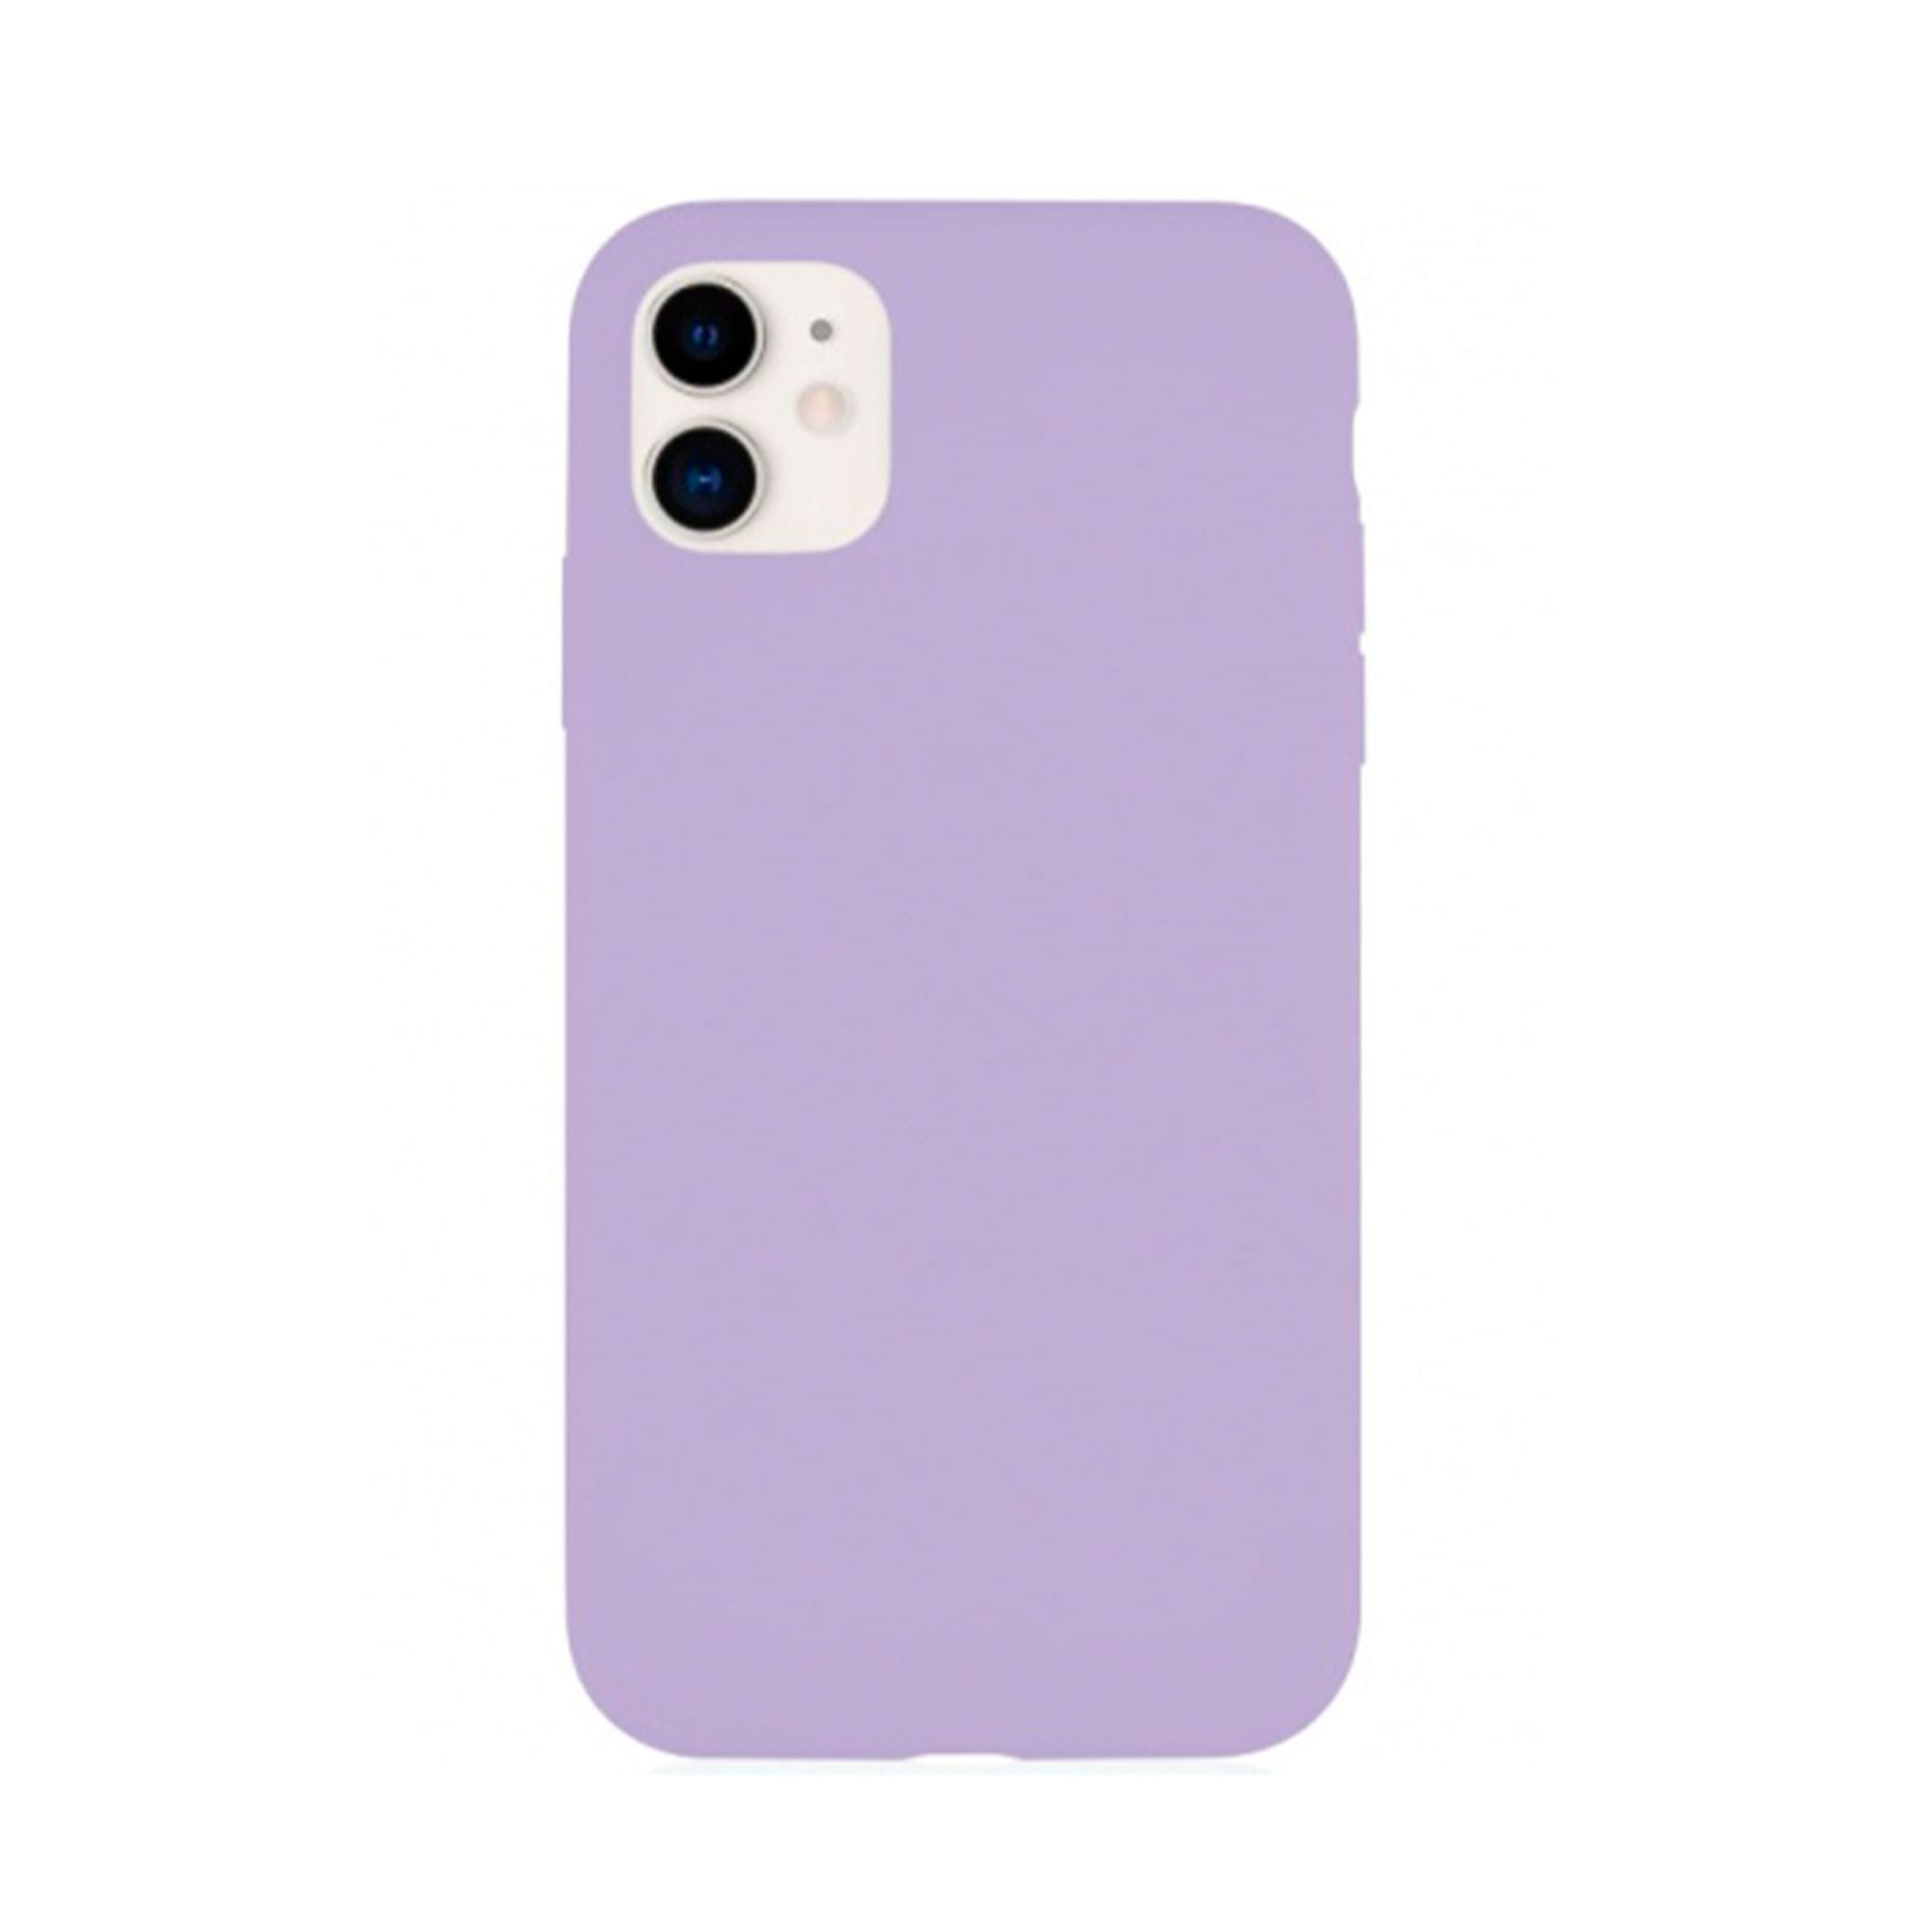 Фото — Чехол для смартфона vlp Silicone Сase для iPhone 11, фиолетовый